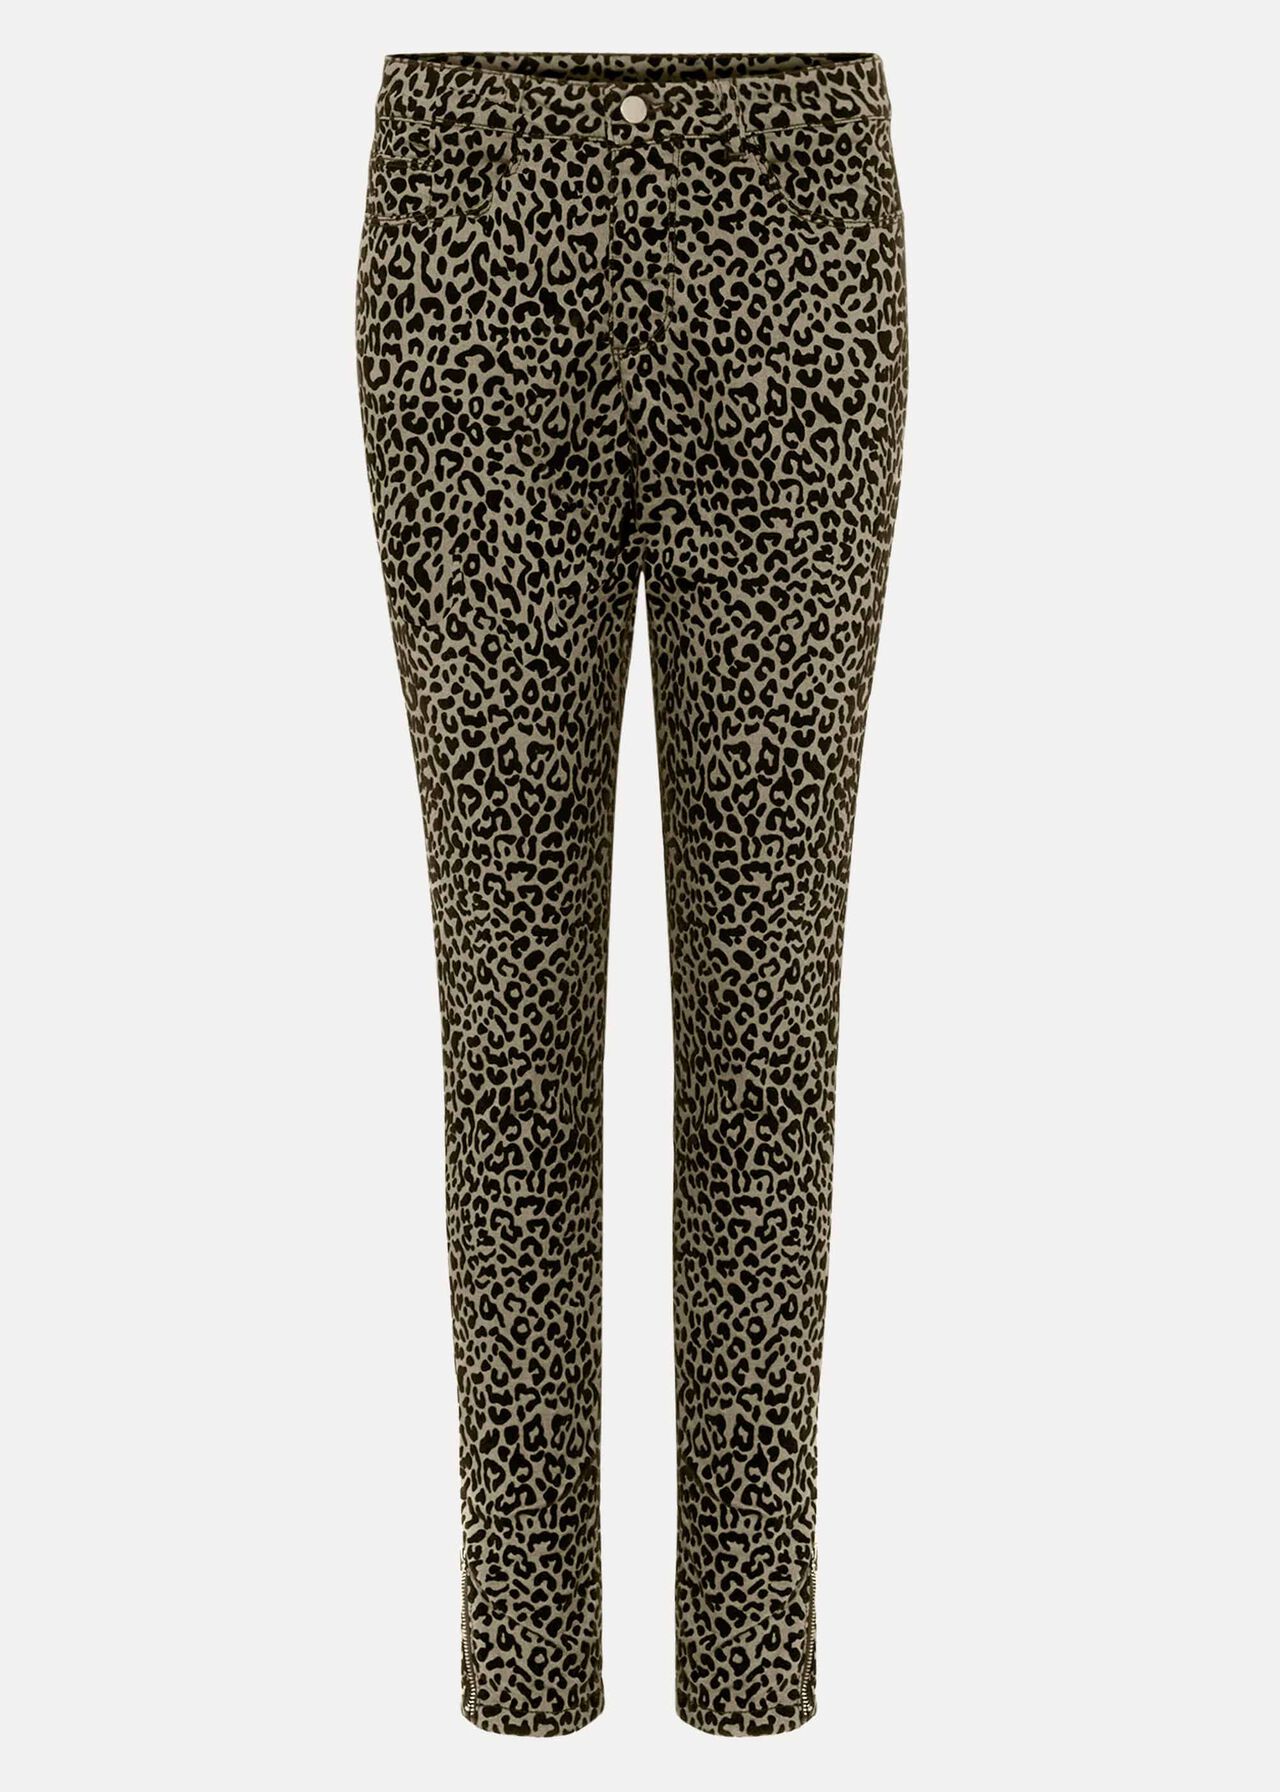 Cherida Leopard Flock Jeans